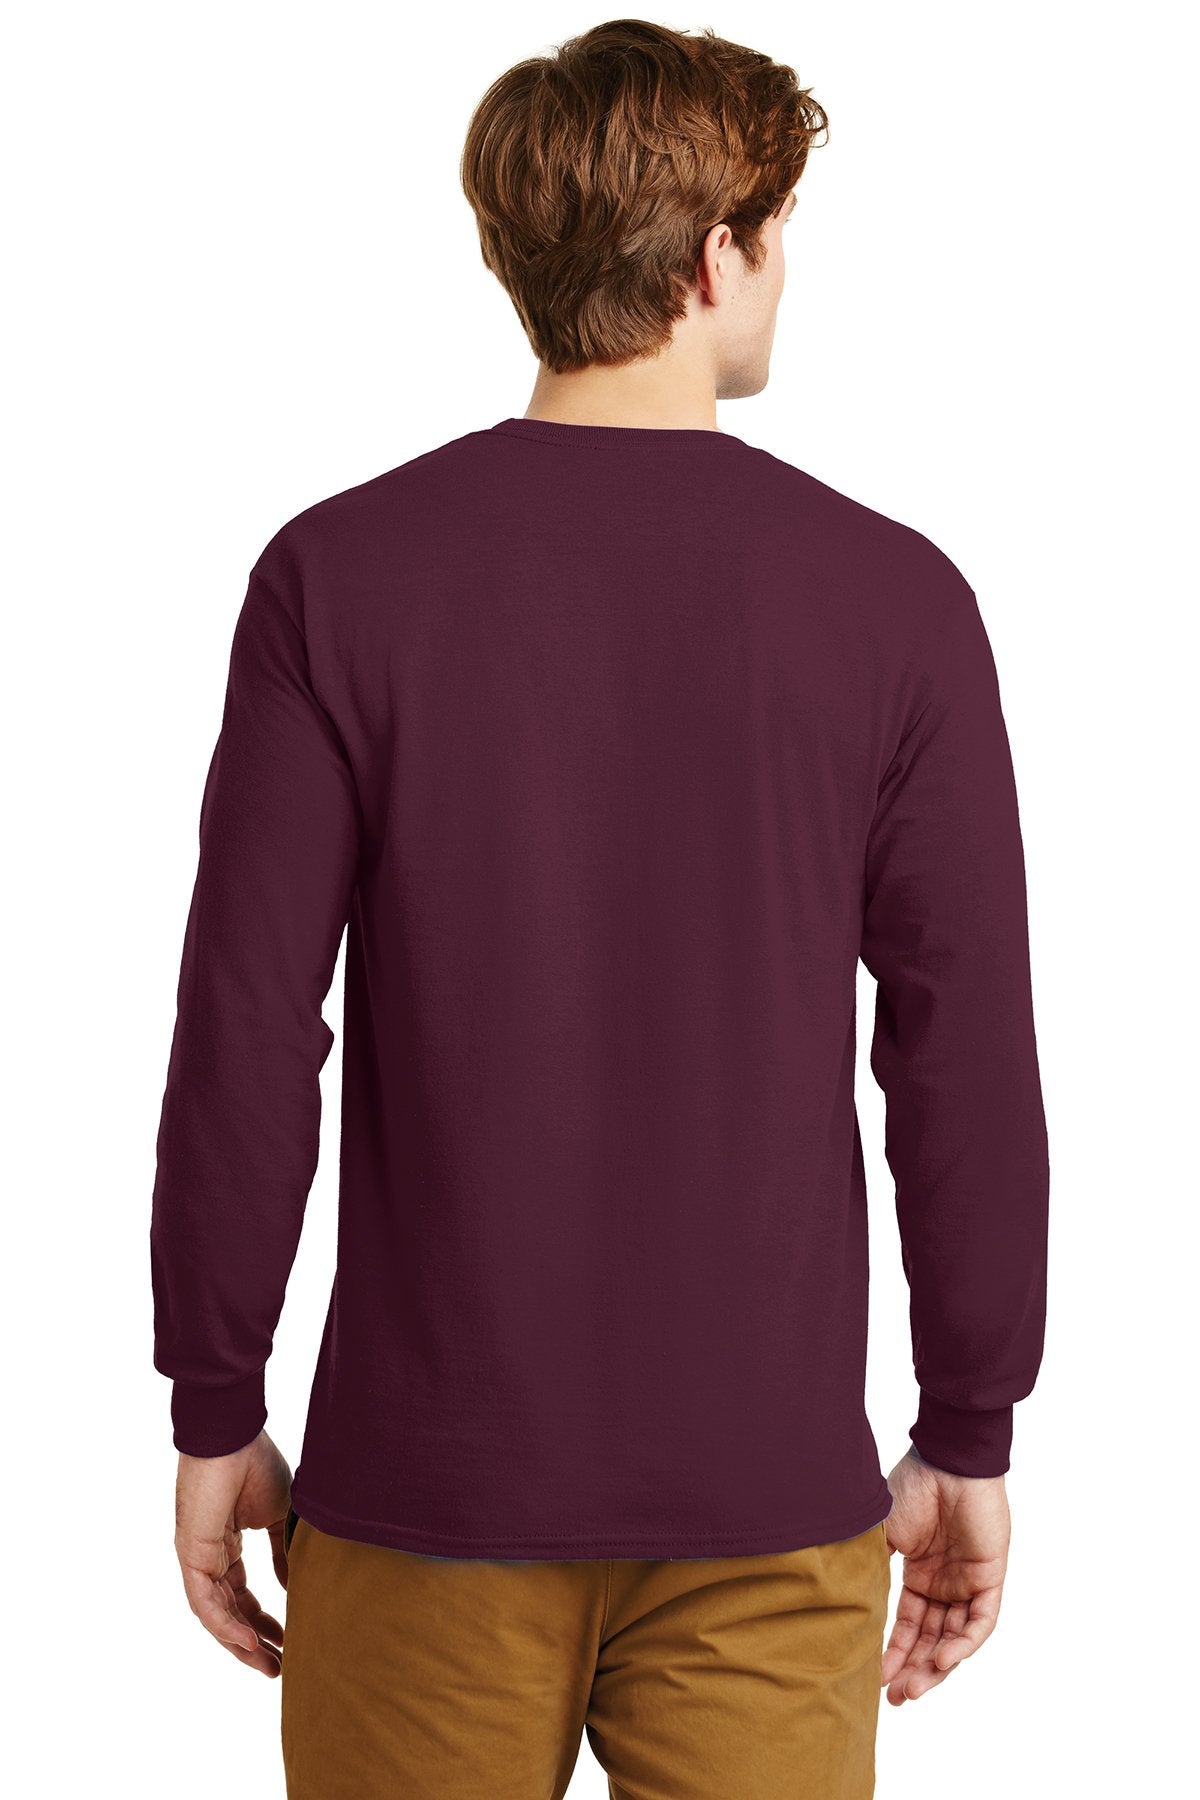 gildan ultra cotton long sleeve t shirt g2400 maroon